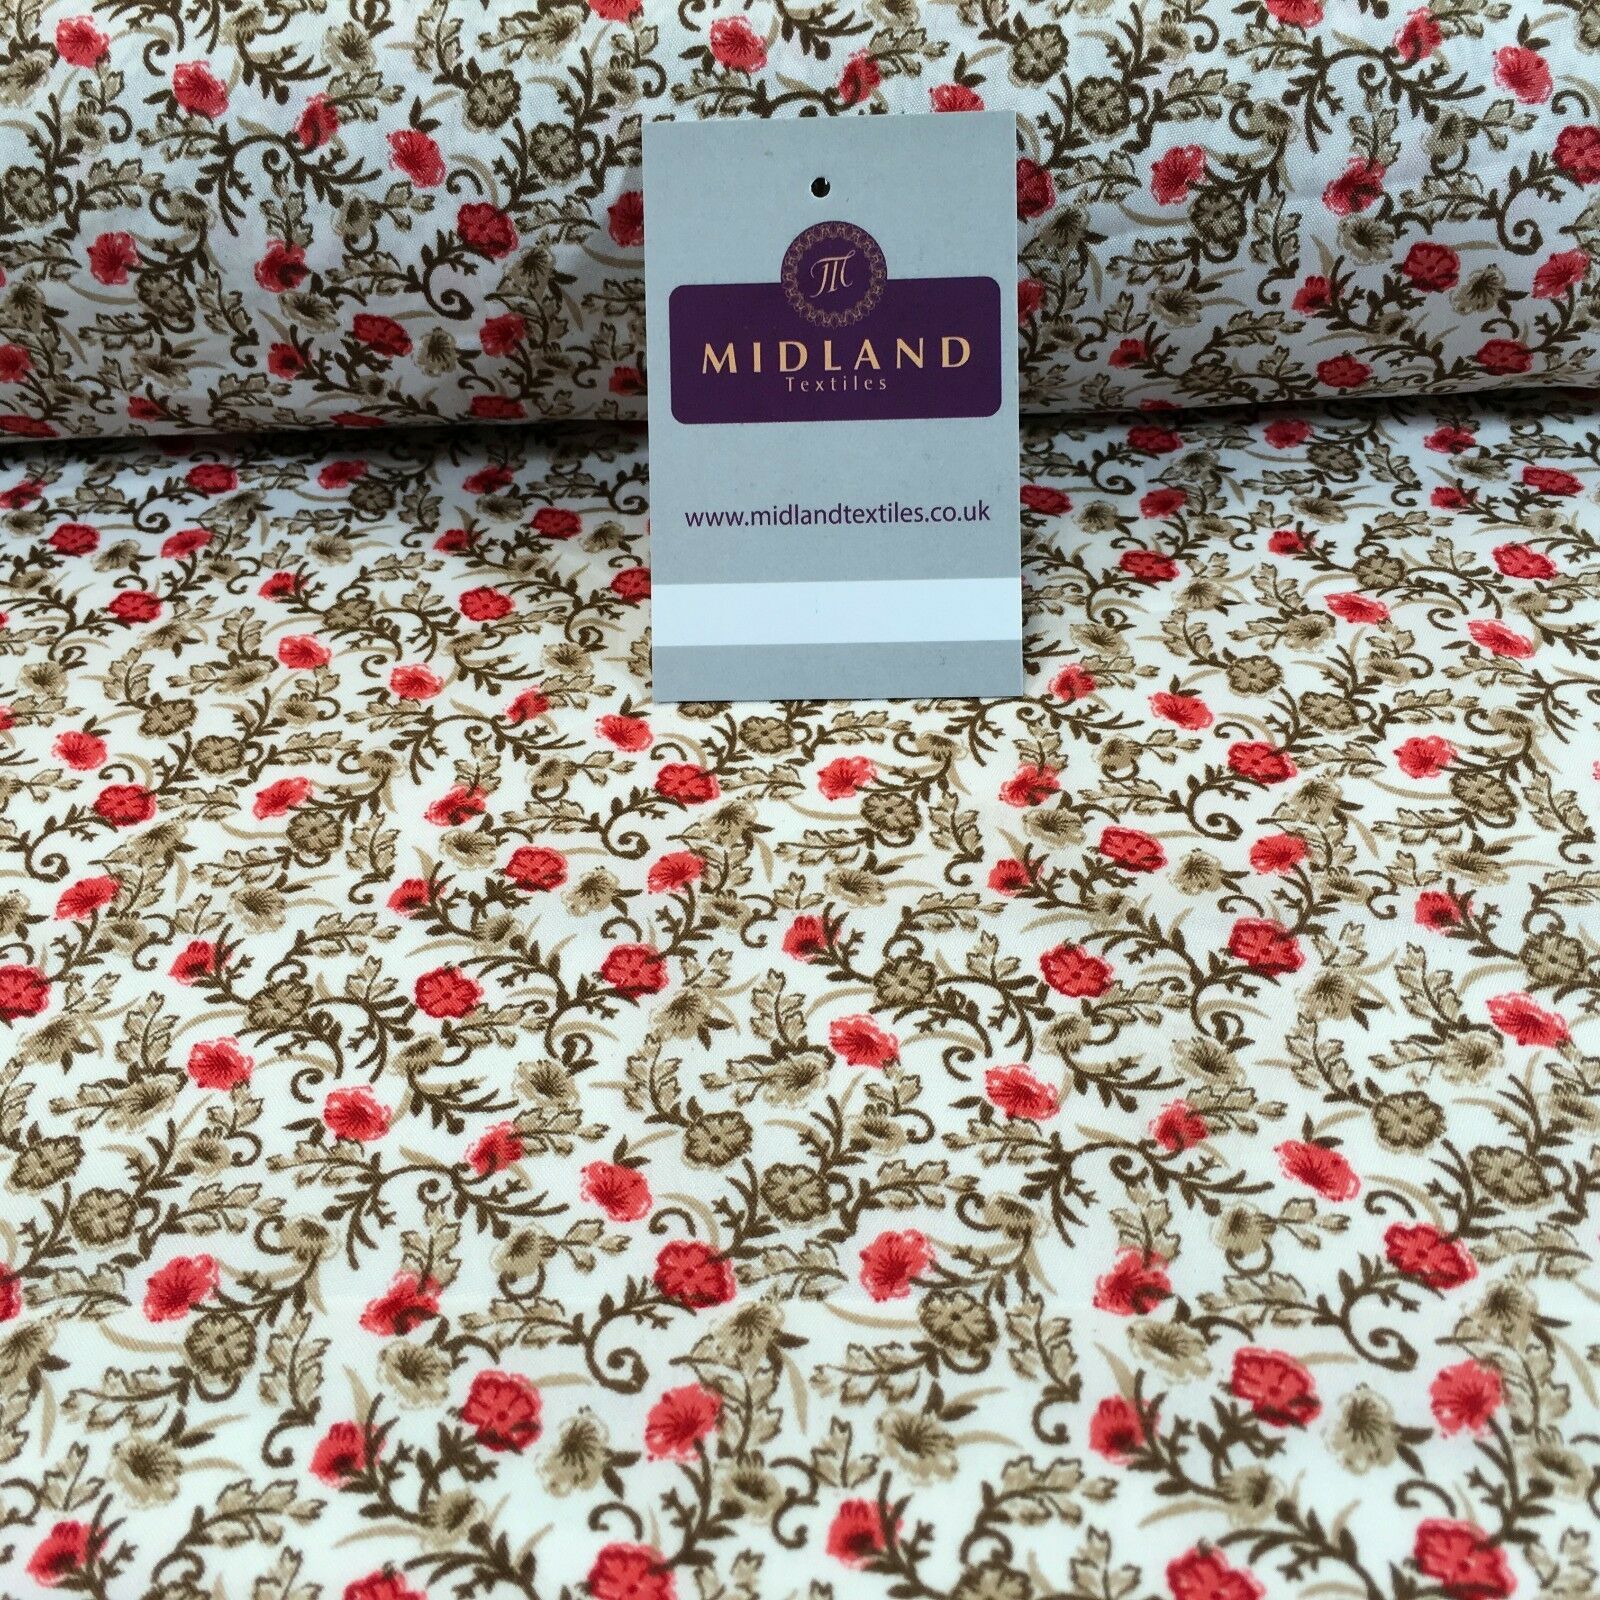 Floral Vintage Shabby Chic Printed soft crepe dress fabric 44" M762 Mtex